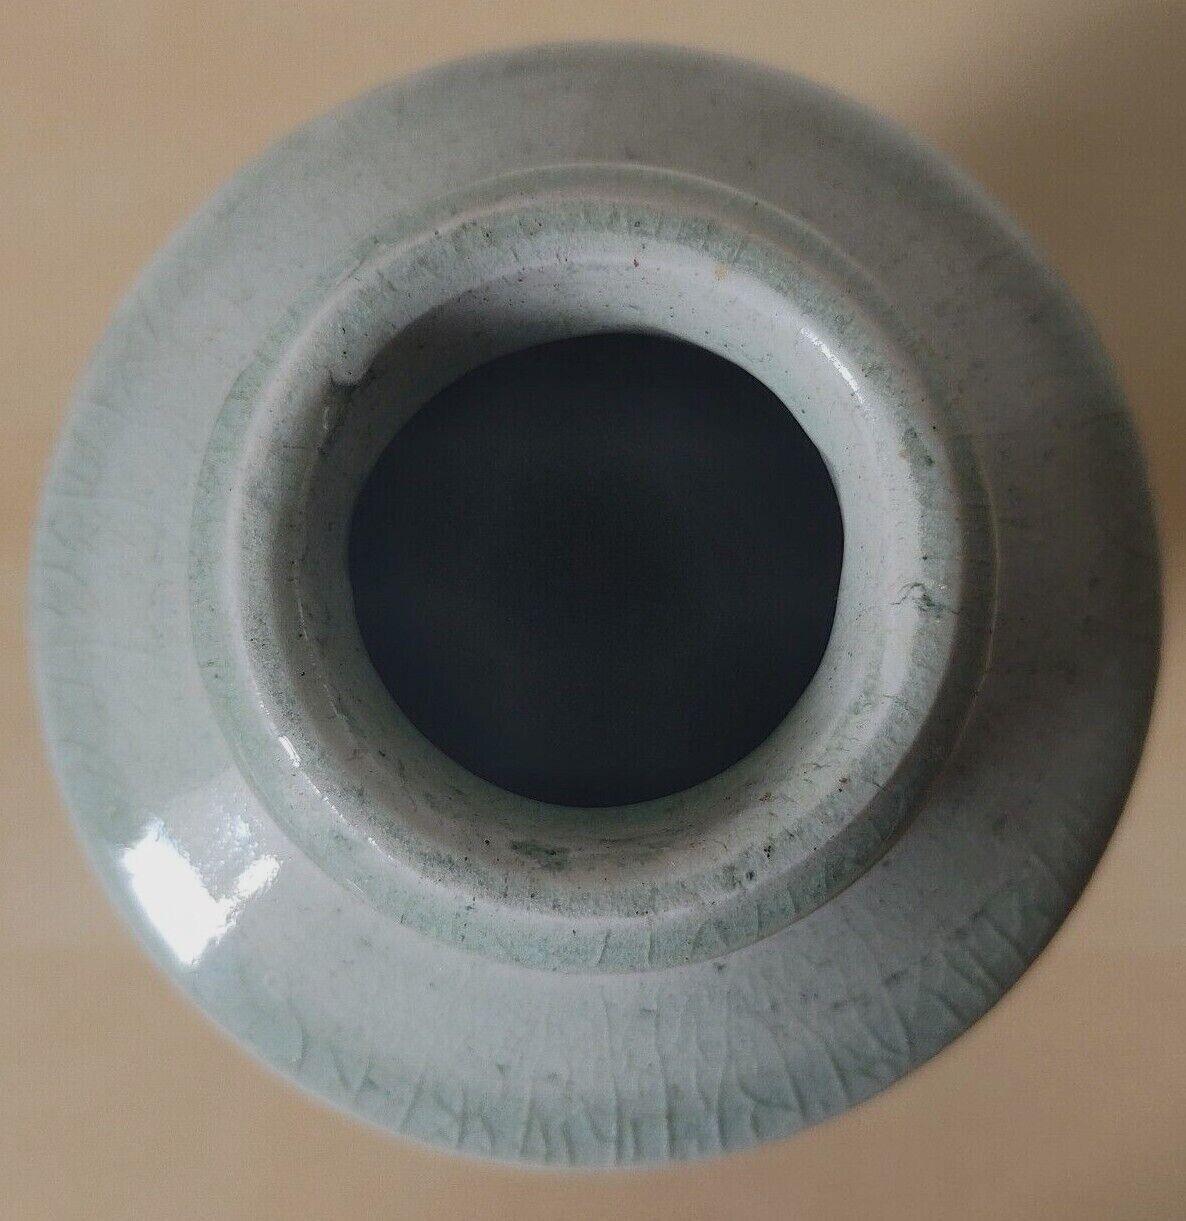 Chinese Ming Dynasty Longquan Celadon-Glazed Pottery Porcelain Vase Pot - Tommy's Treasure